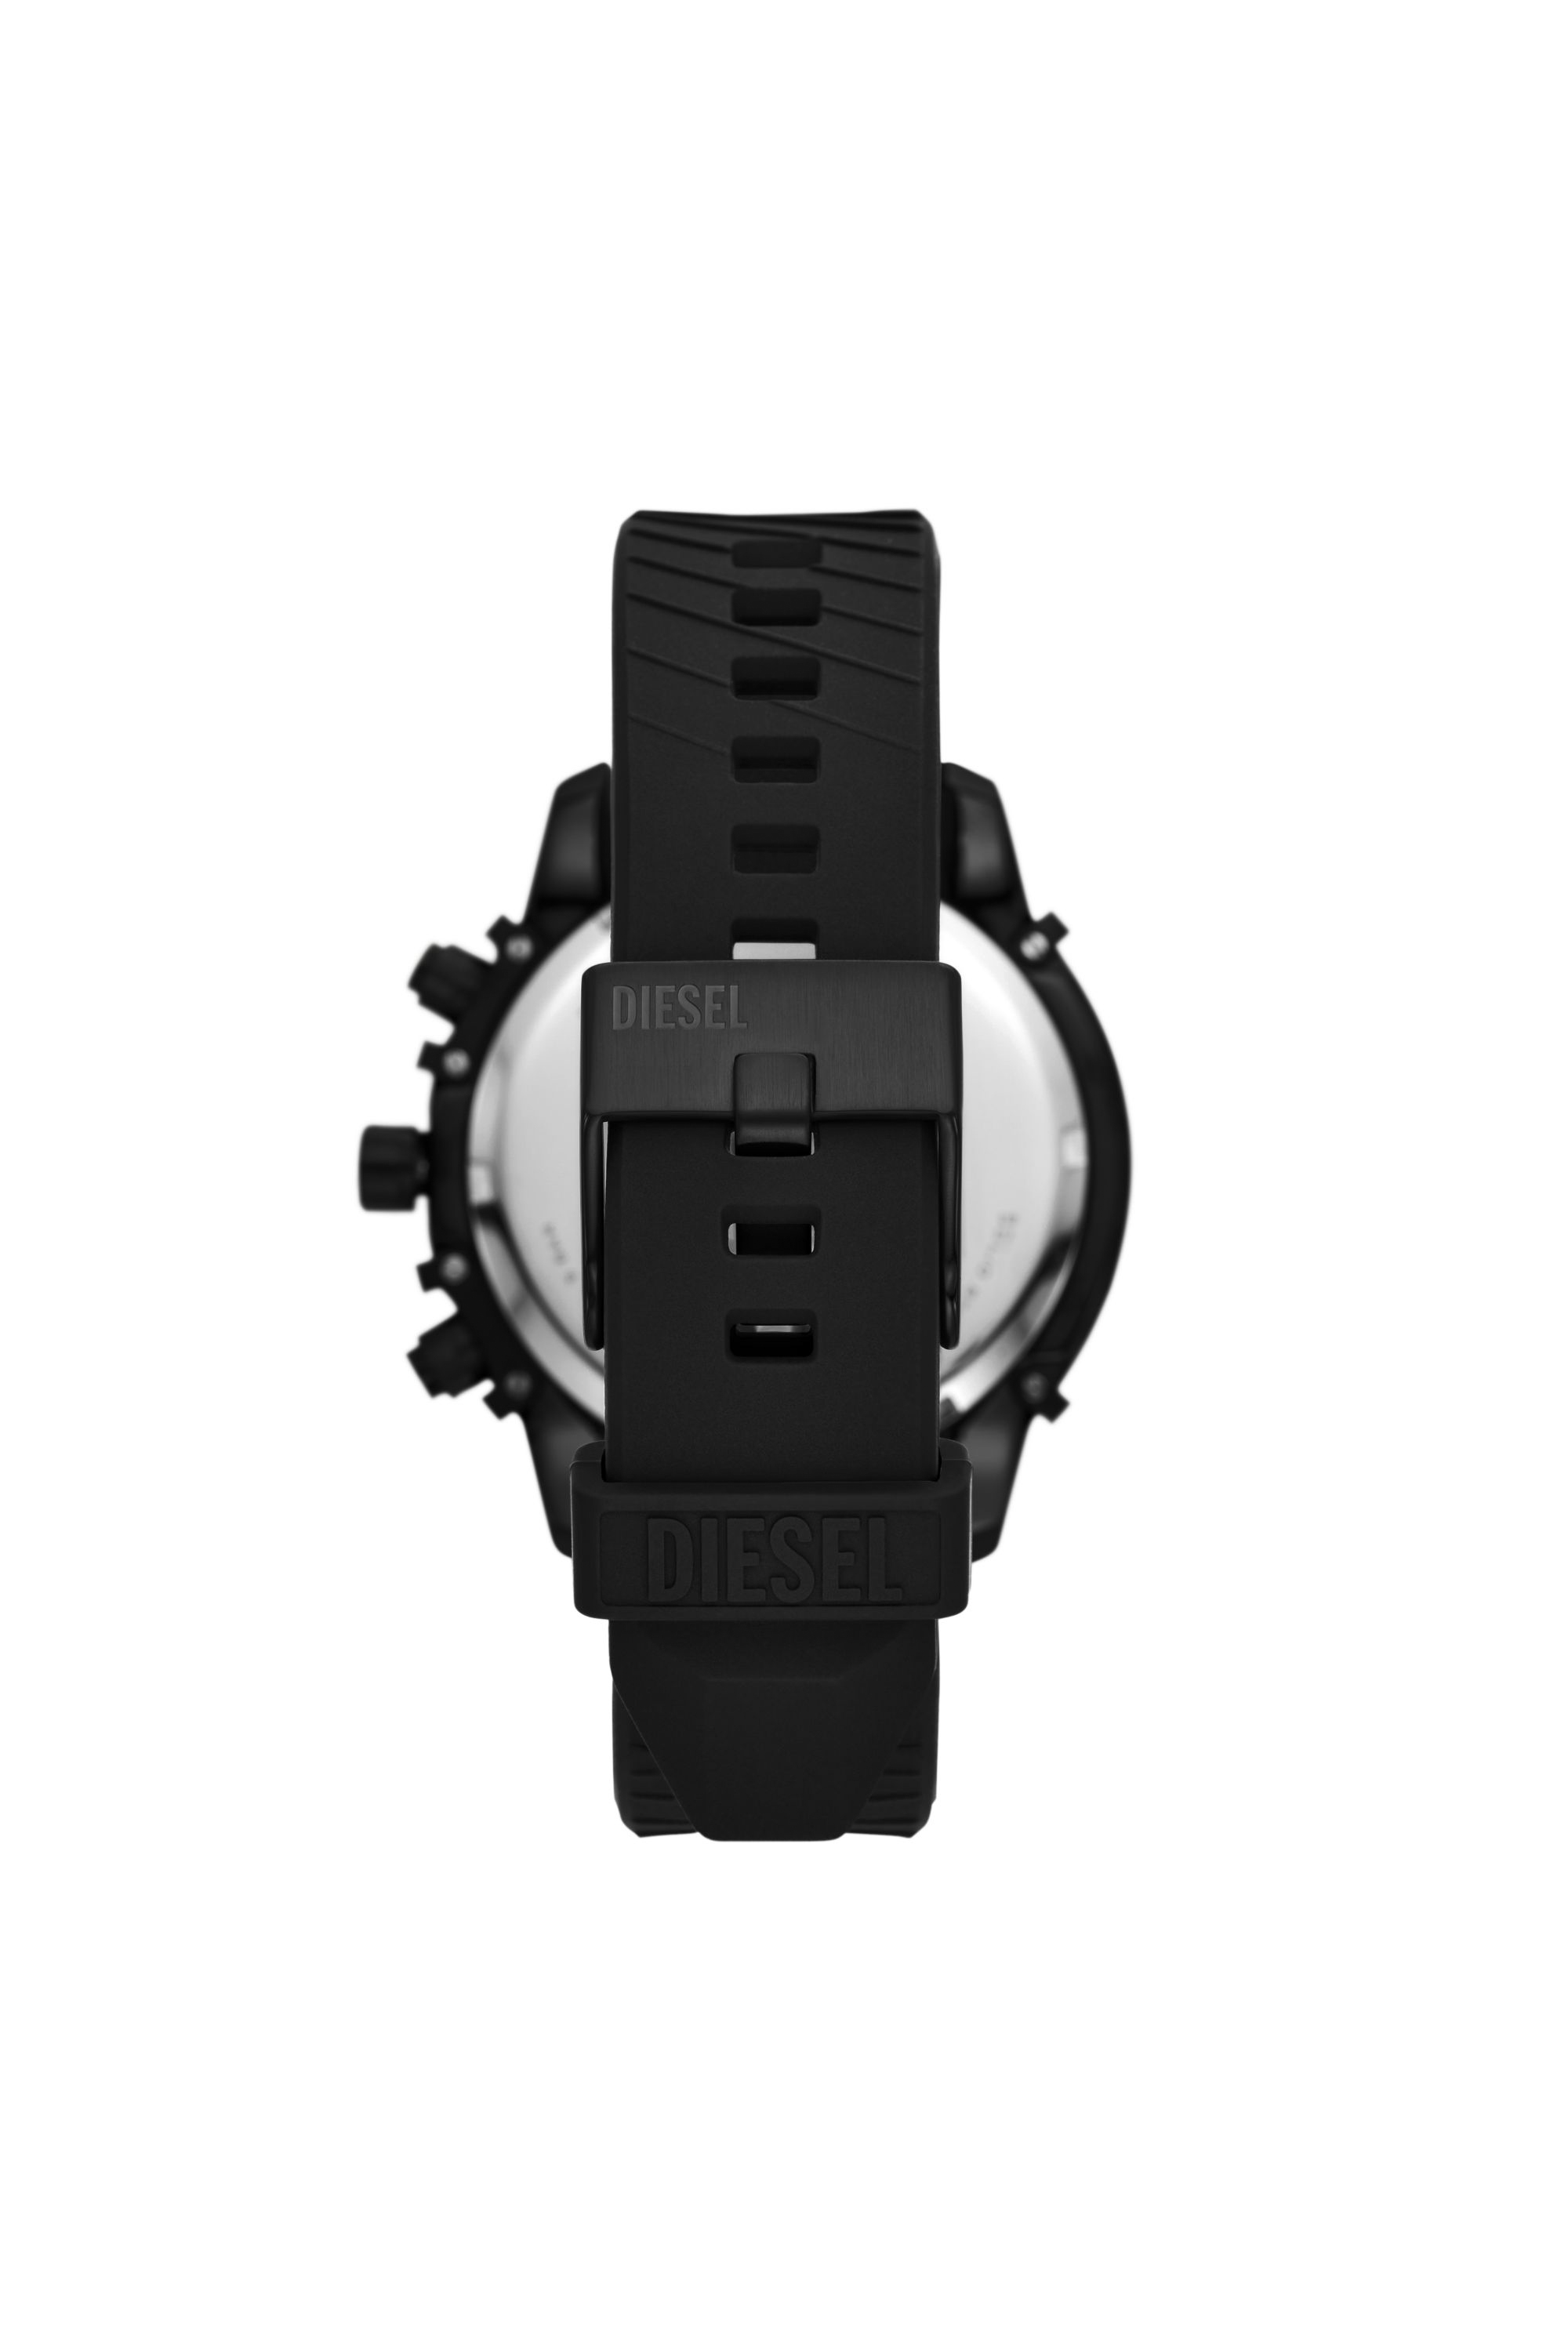 Diesel - DZ4650, Man Griffed silicone watch and bracelet set in Black - Image 2